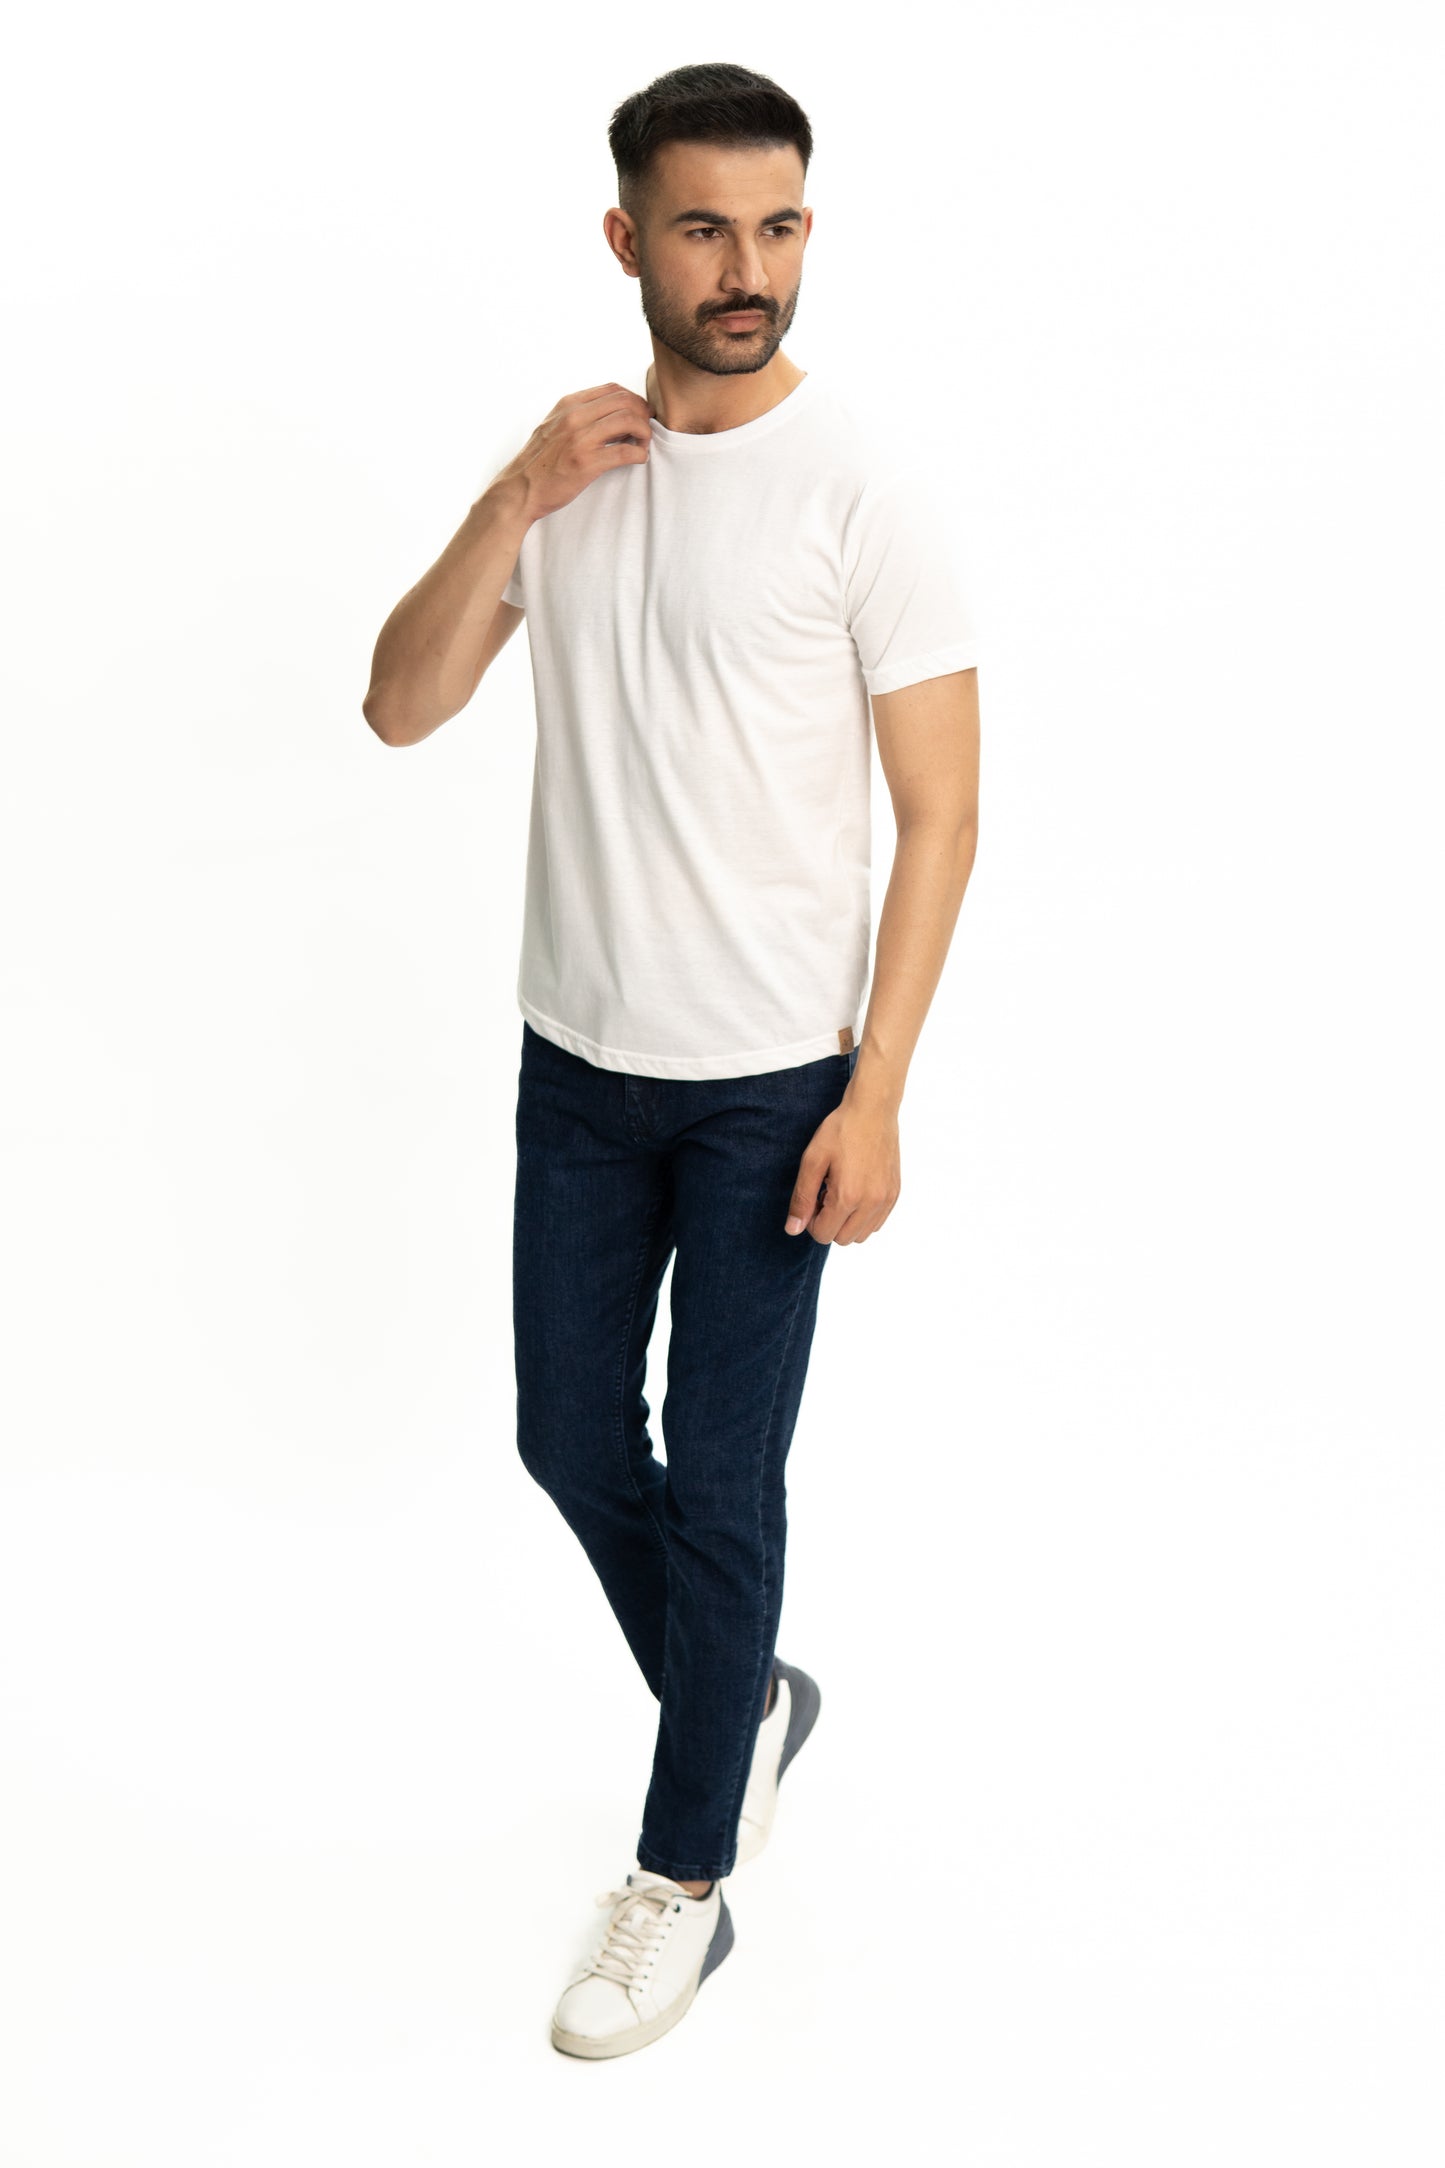 IVAR® Luxeknit White shirt (Curved Hem design)